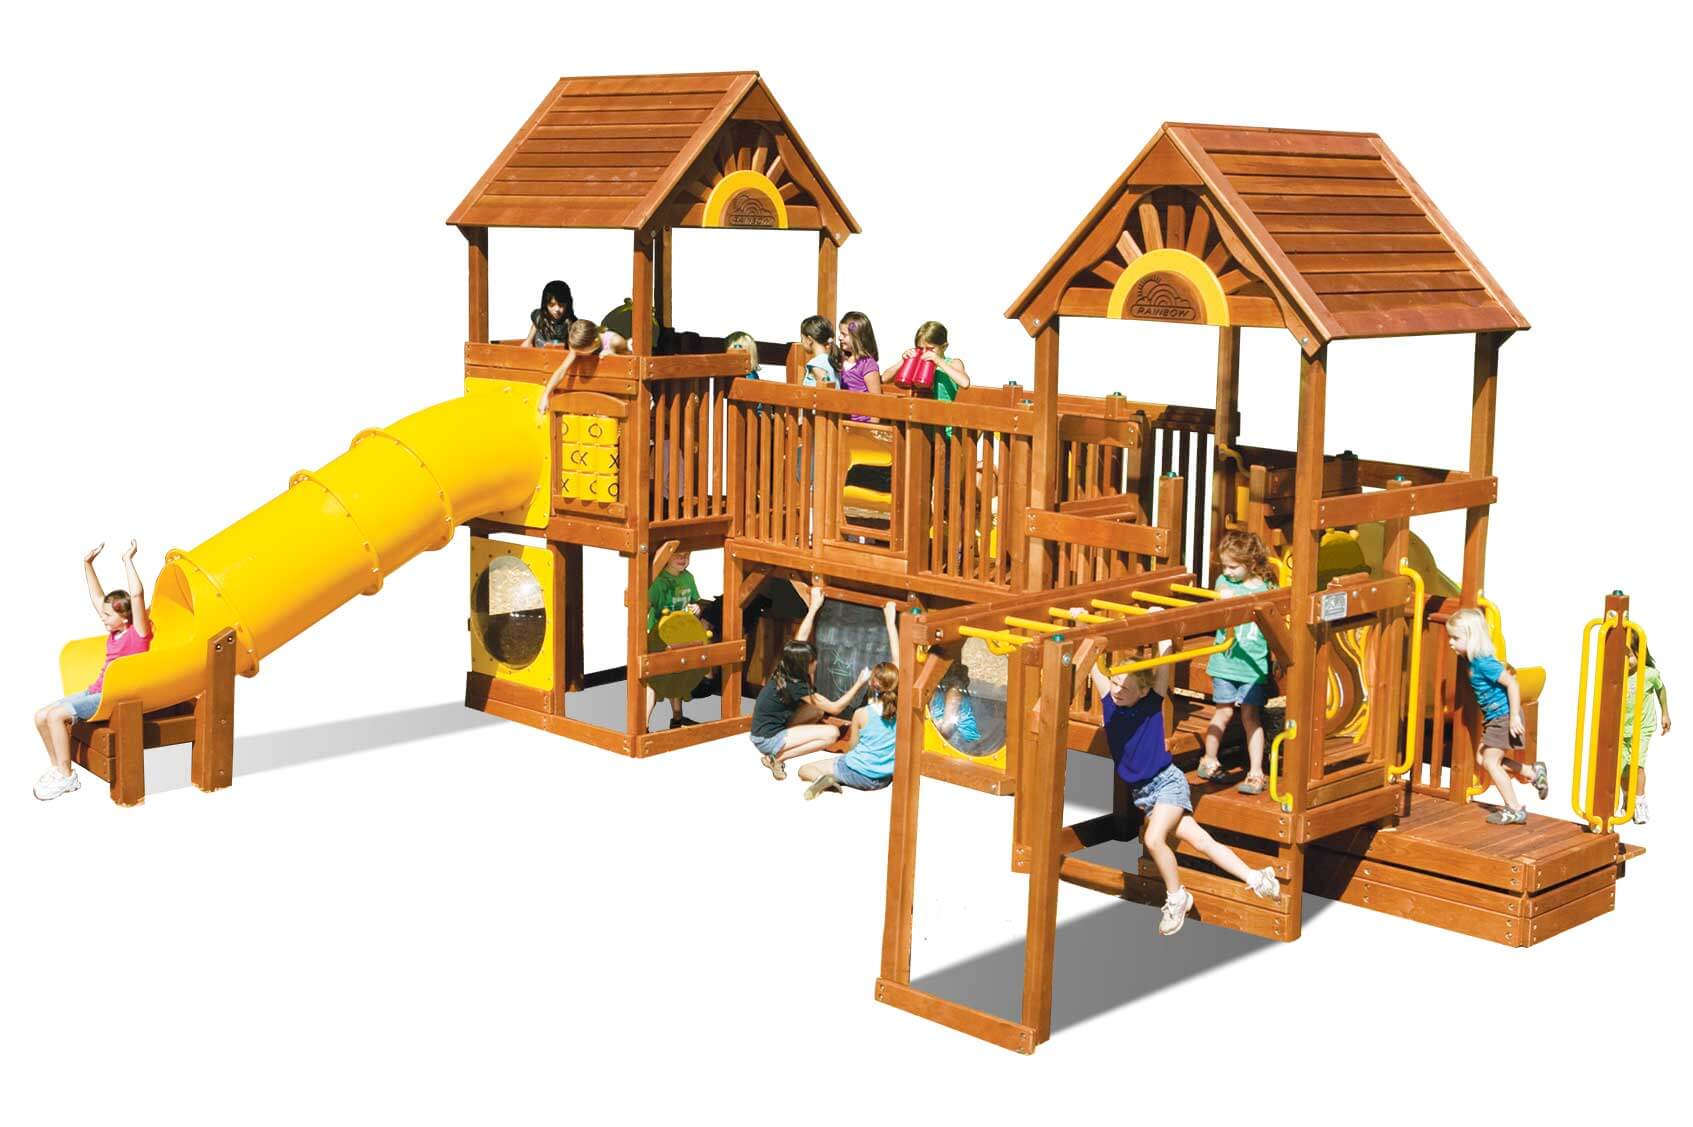 Commercial Playground Equipment – Rainbow Play Village Design B (RPS-97B) - Rainbow Play Systems of Texas